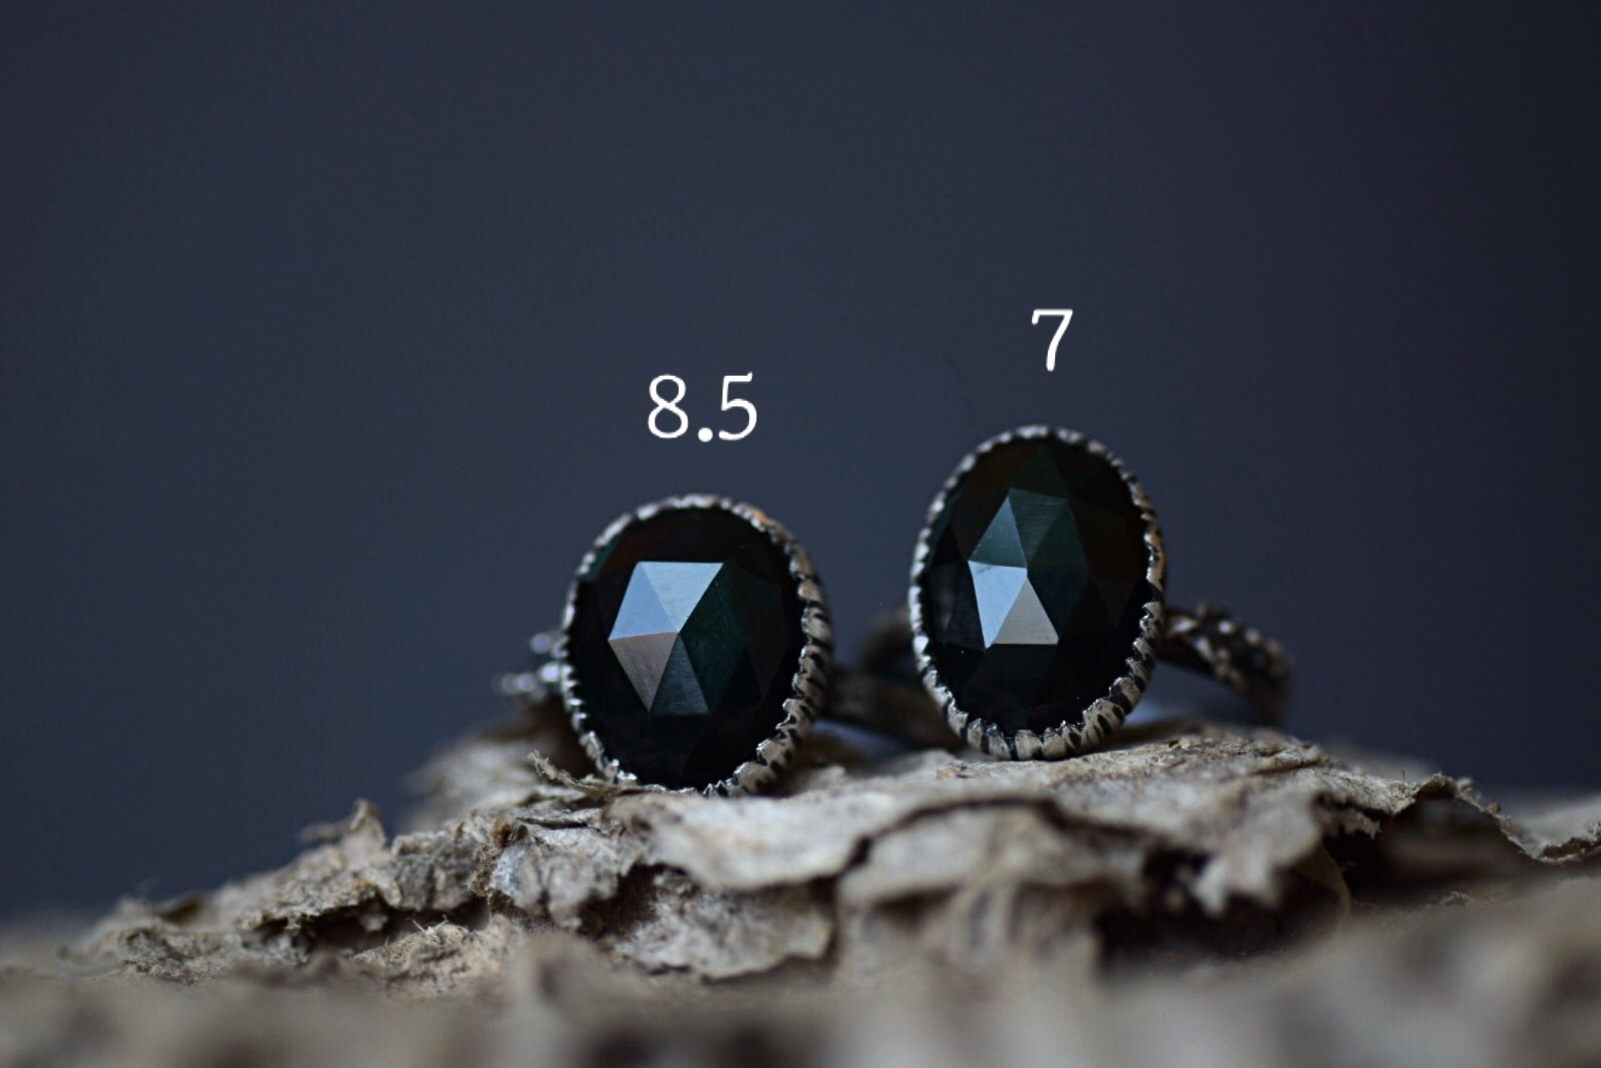 Evergreen Obsidian Fern Rings - Sizes 7, 8.5